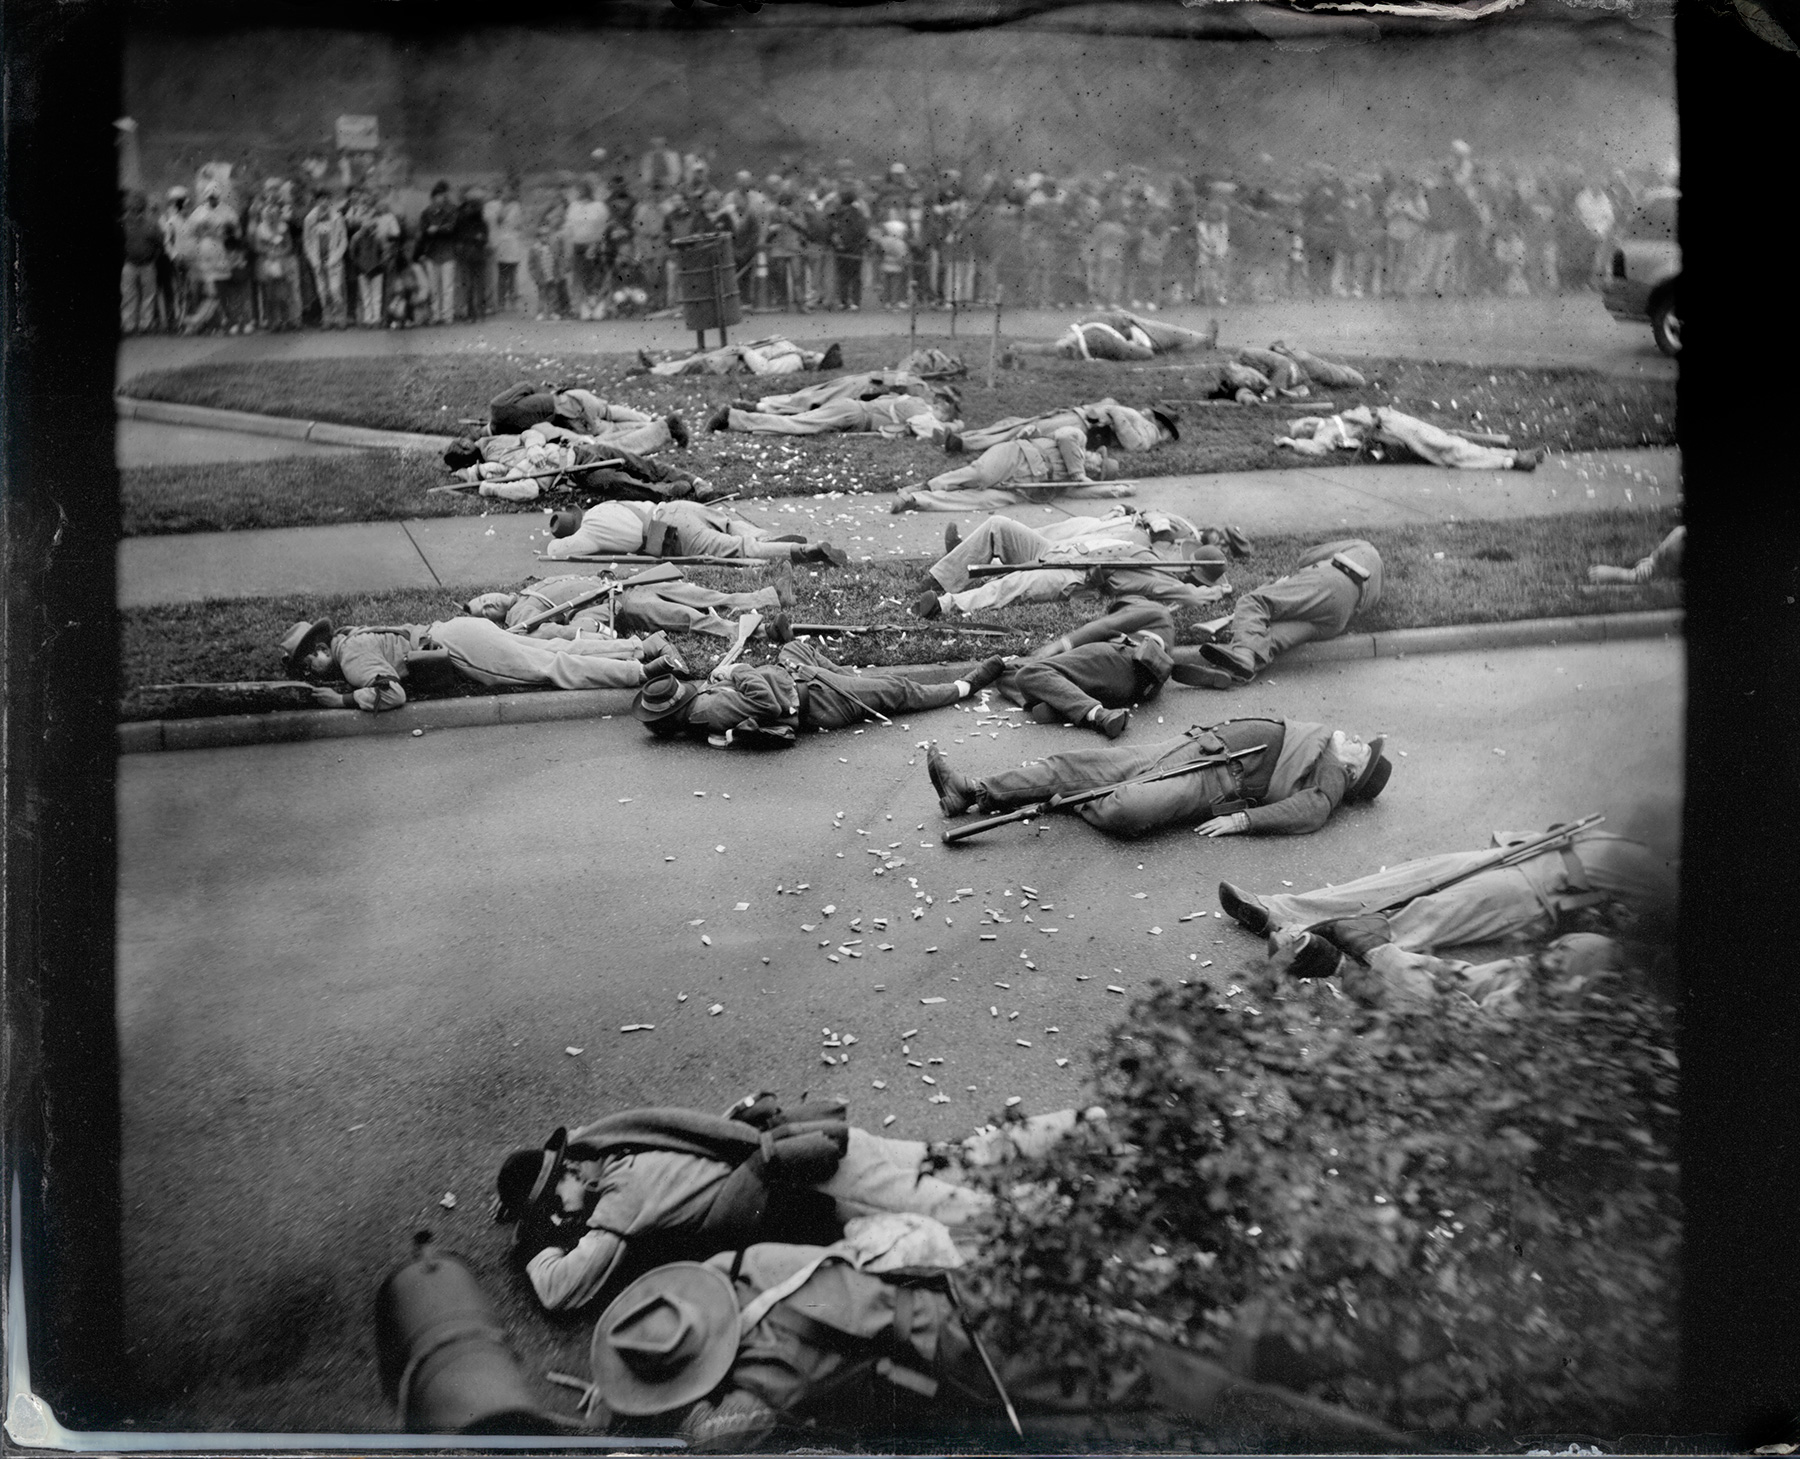  Bodies After the Battle, Fredericksburg, 2013 